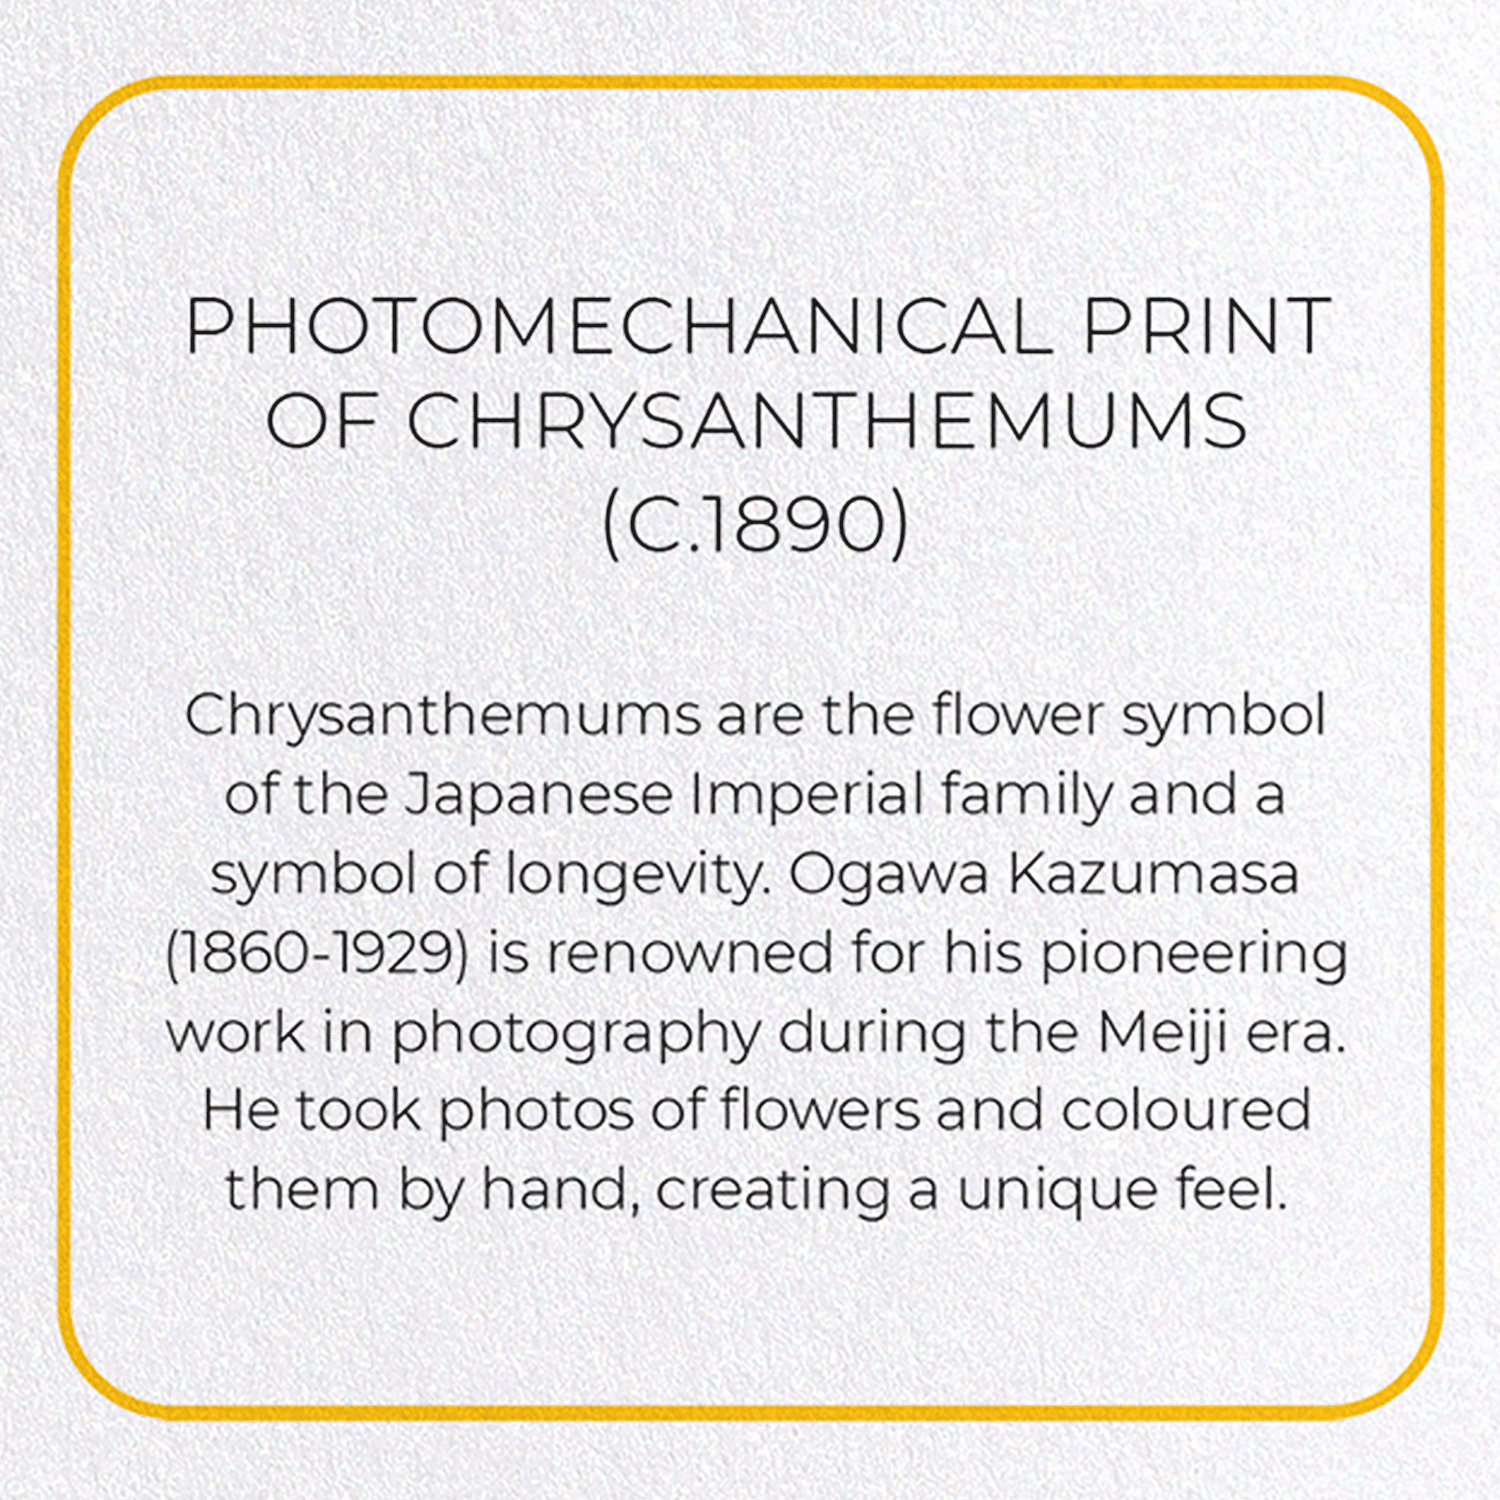 PHOTOMECHANICAL PRINT OF CHRYSANTHEMUMS (C.1890)